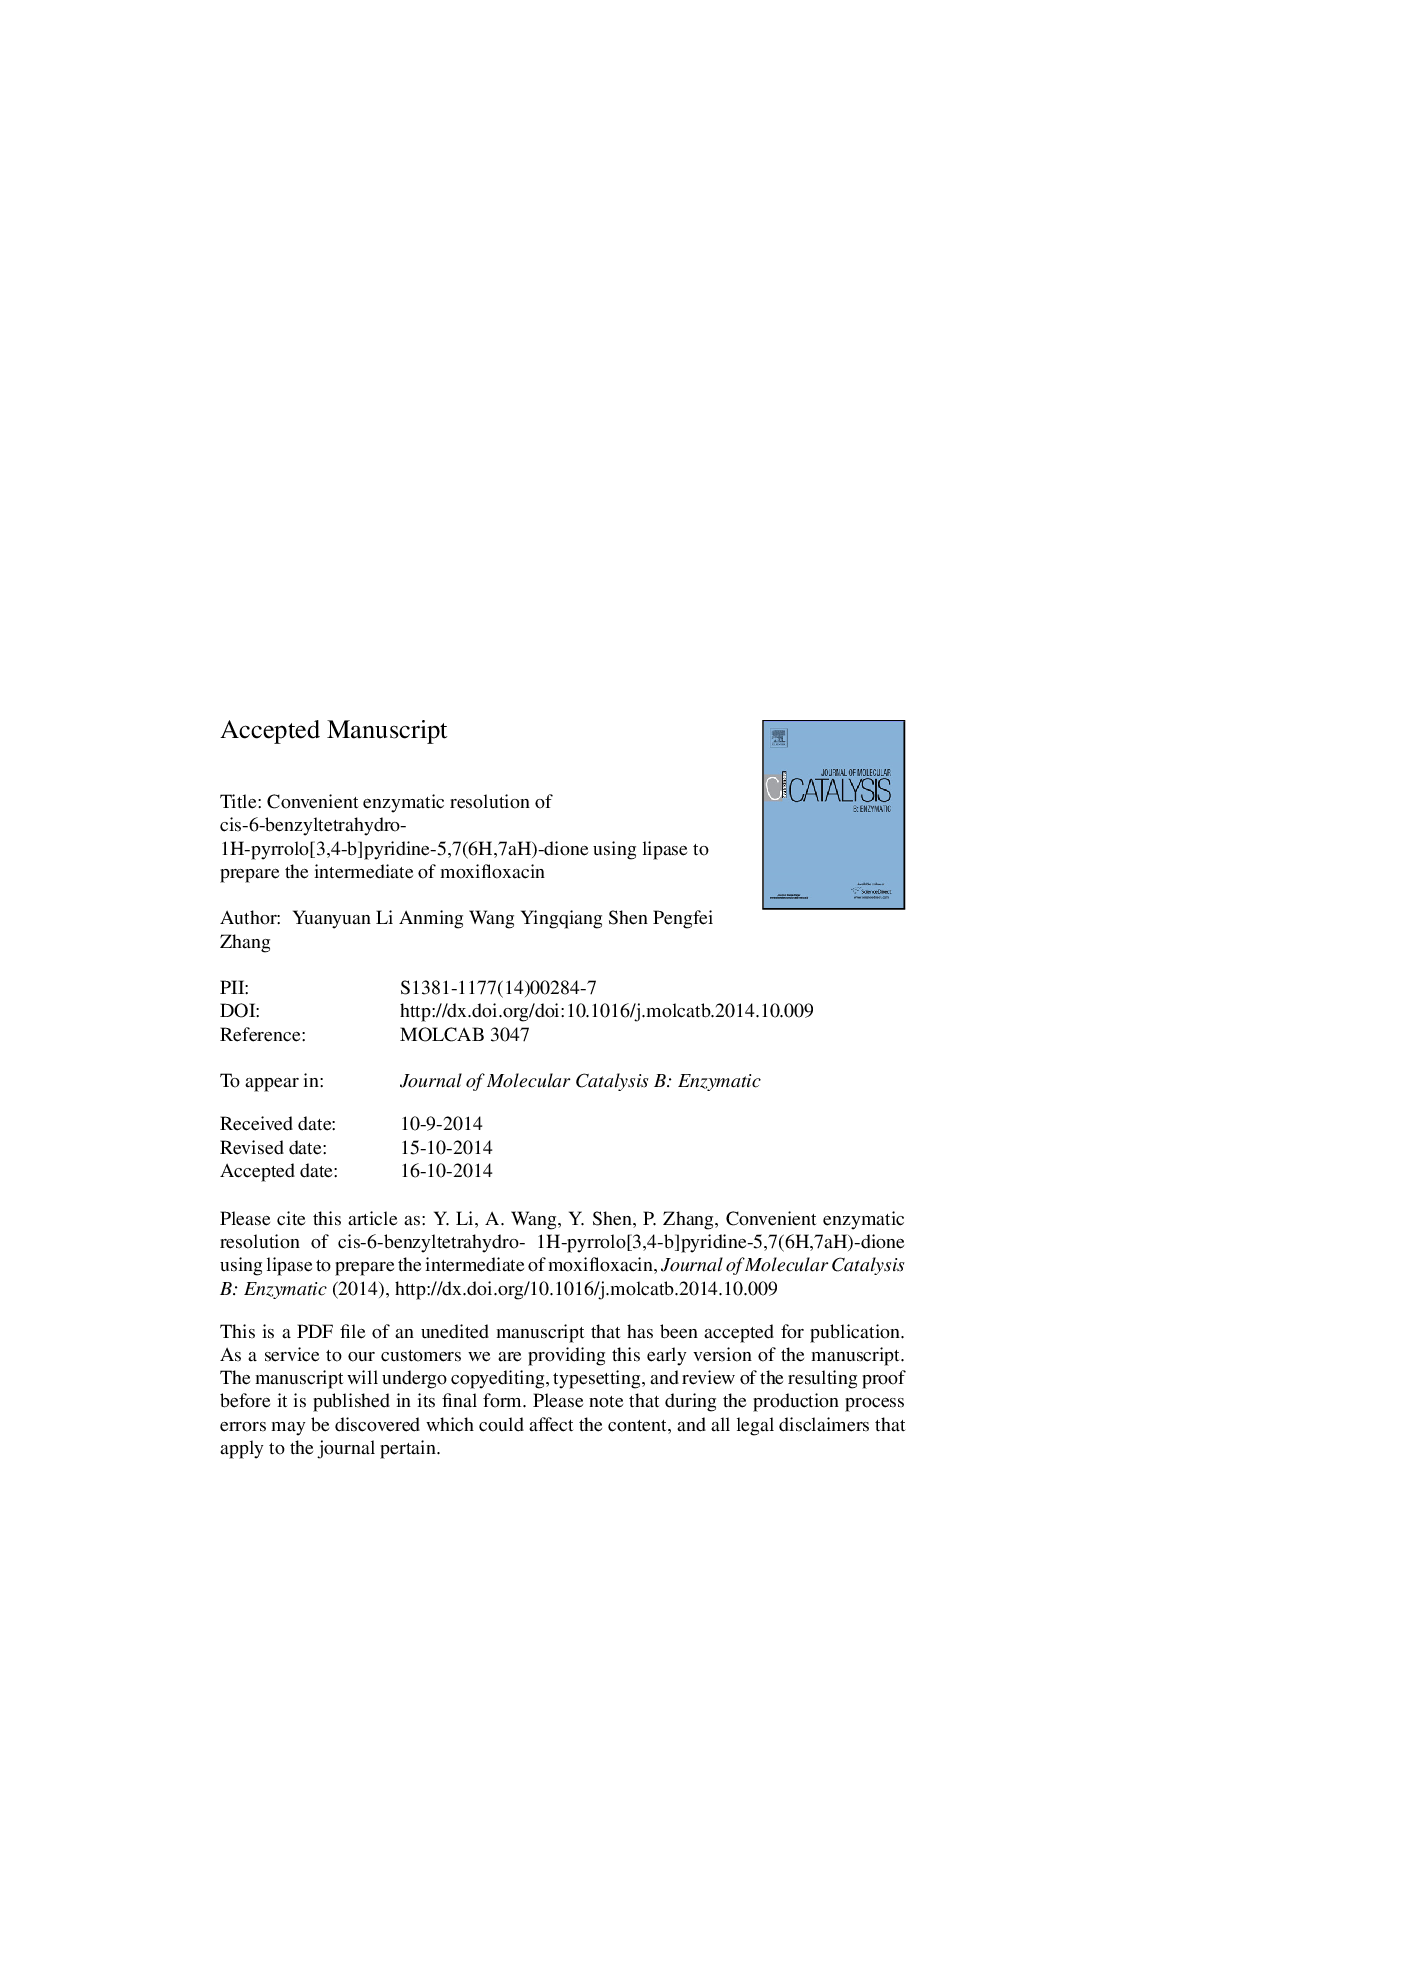 Convenient enzymatic resolution of cis-6-benzyltetrahydro-1H-pyrrolo[3,4-b]pyridine-5,7(6H,7aH)-dione using lipase to prepare the intermediate of moxifloxacin